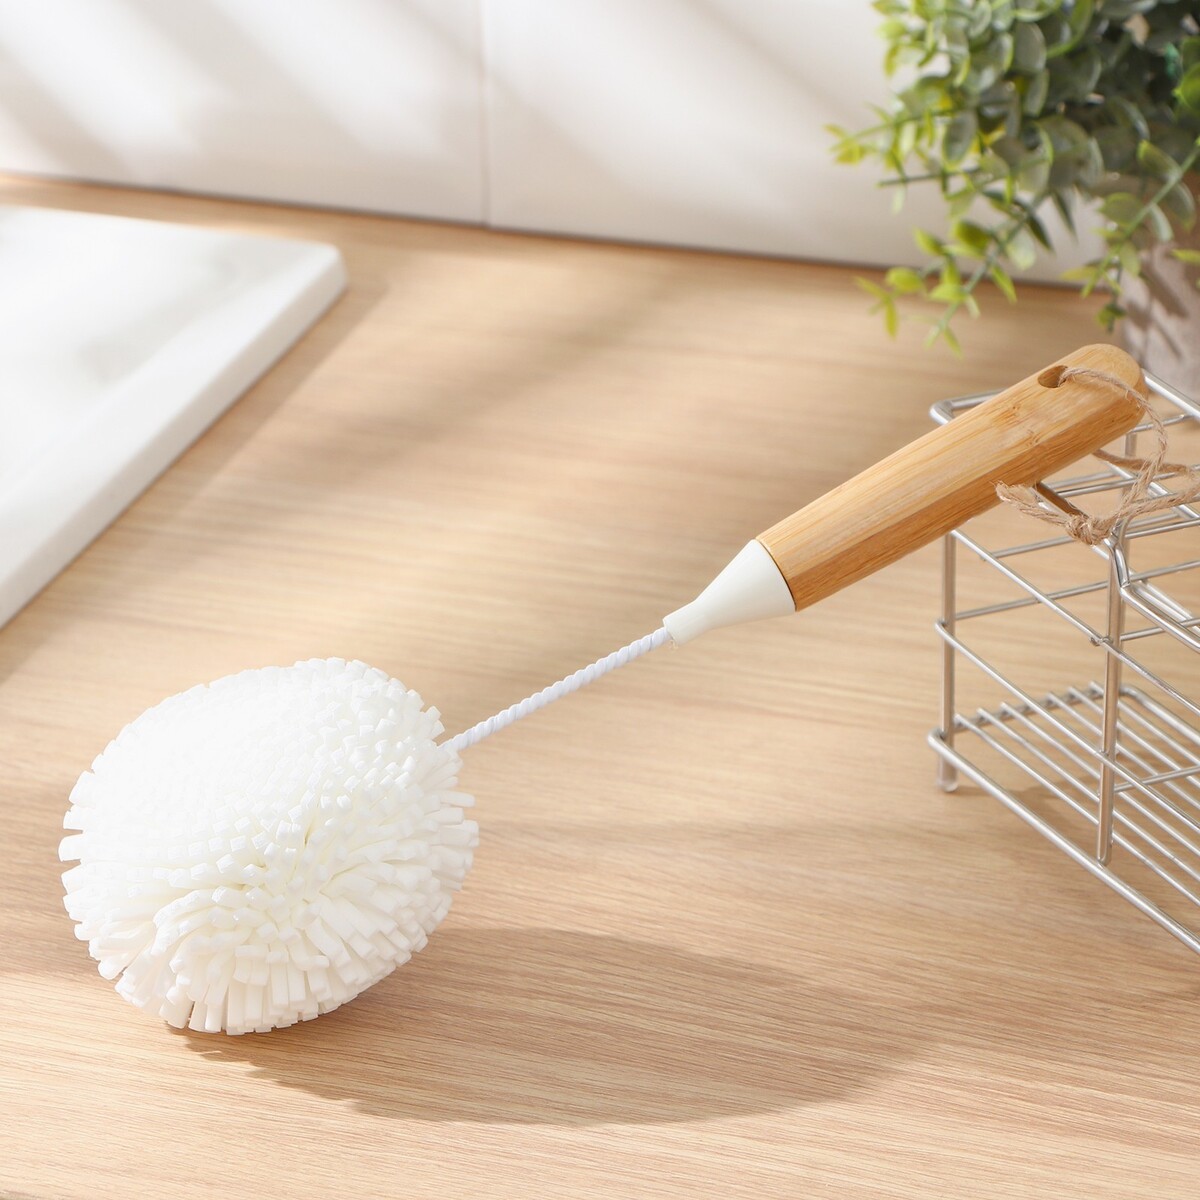 Ёрш для посуды доляна meli, бамбуковая ручка, eva, шар, 26×10 см ёрш для посуды доляна meli 34×6 см с поролоном бамбуковая ручка замшевая петелька